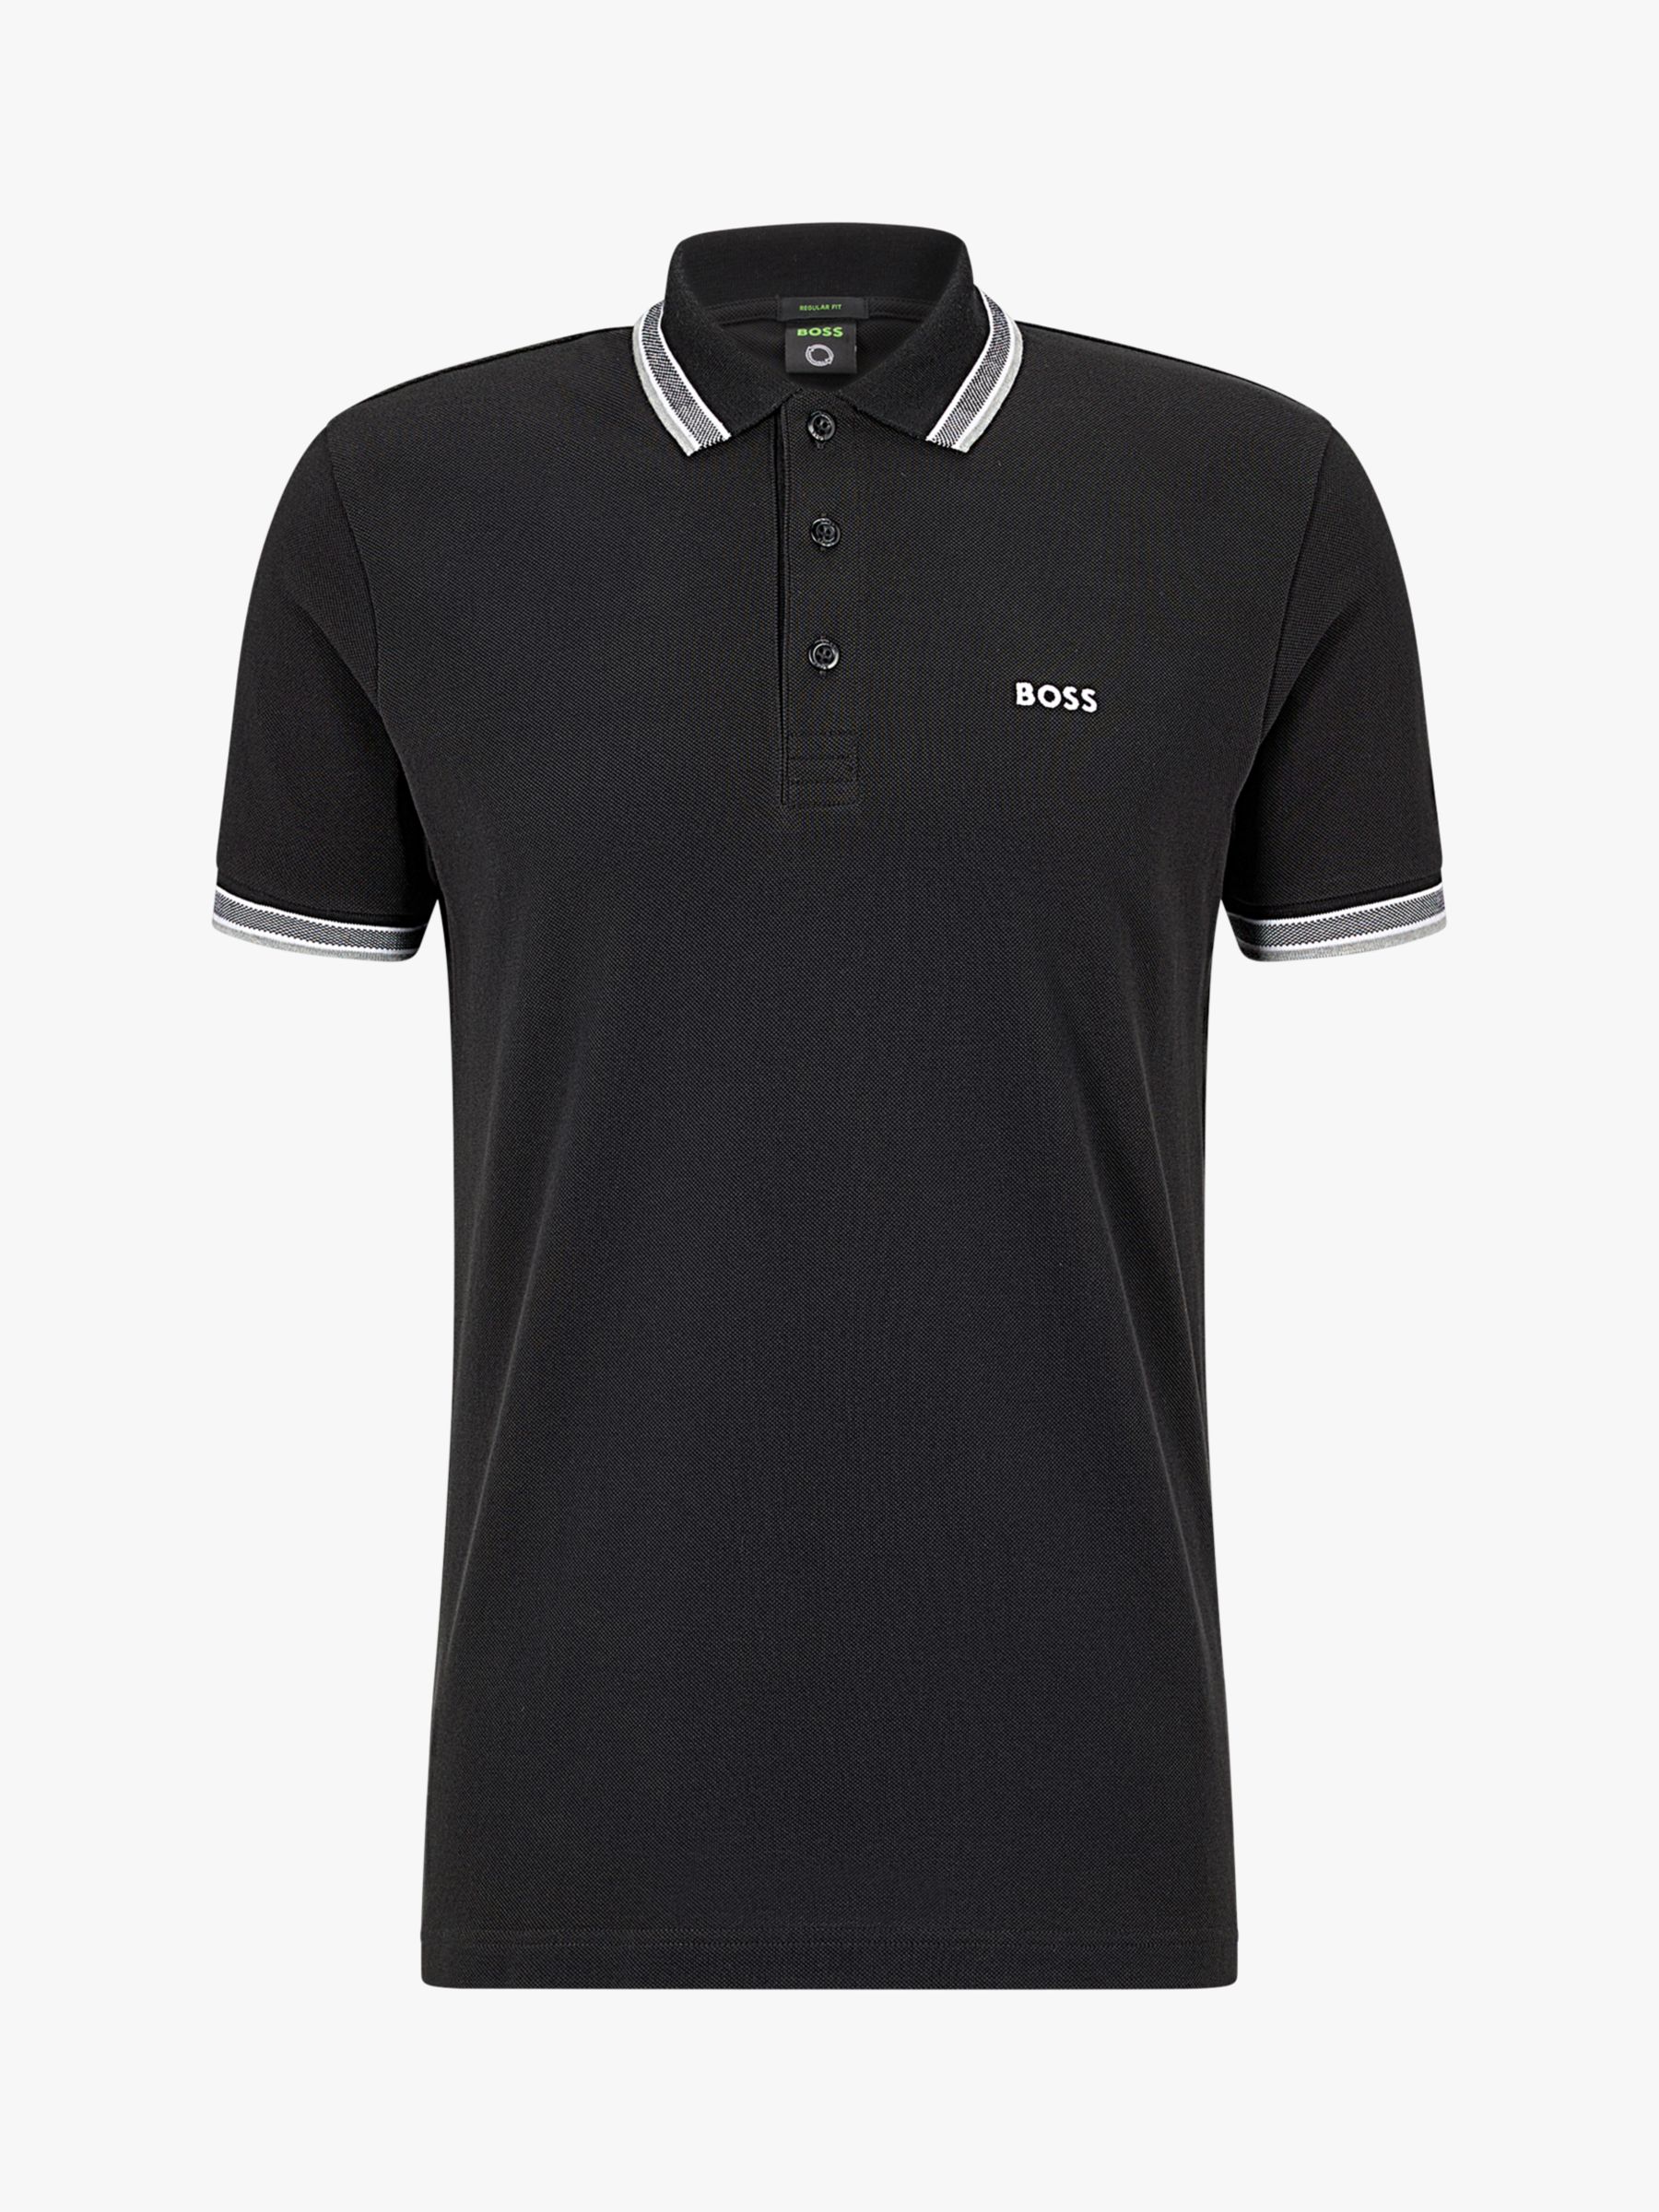 BOSS Paddy Short Sleeve Polo Shirt, Black at John Lewis & Partners